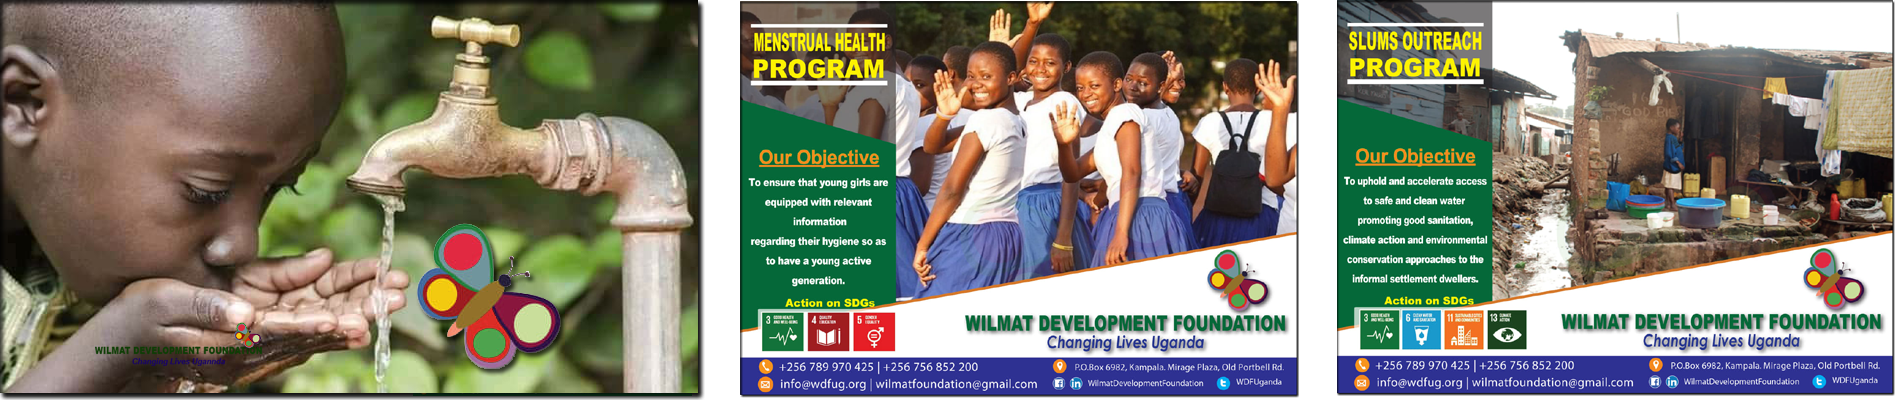 Wilmat Development Foundation  - Menstrual Health Program - Slums Outreach Program